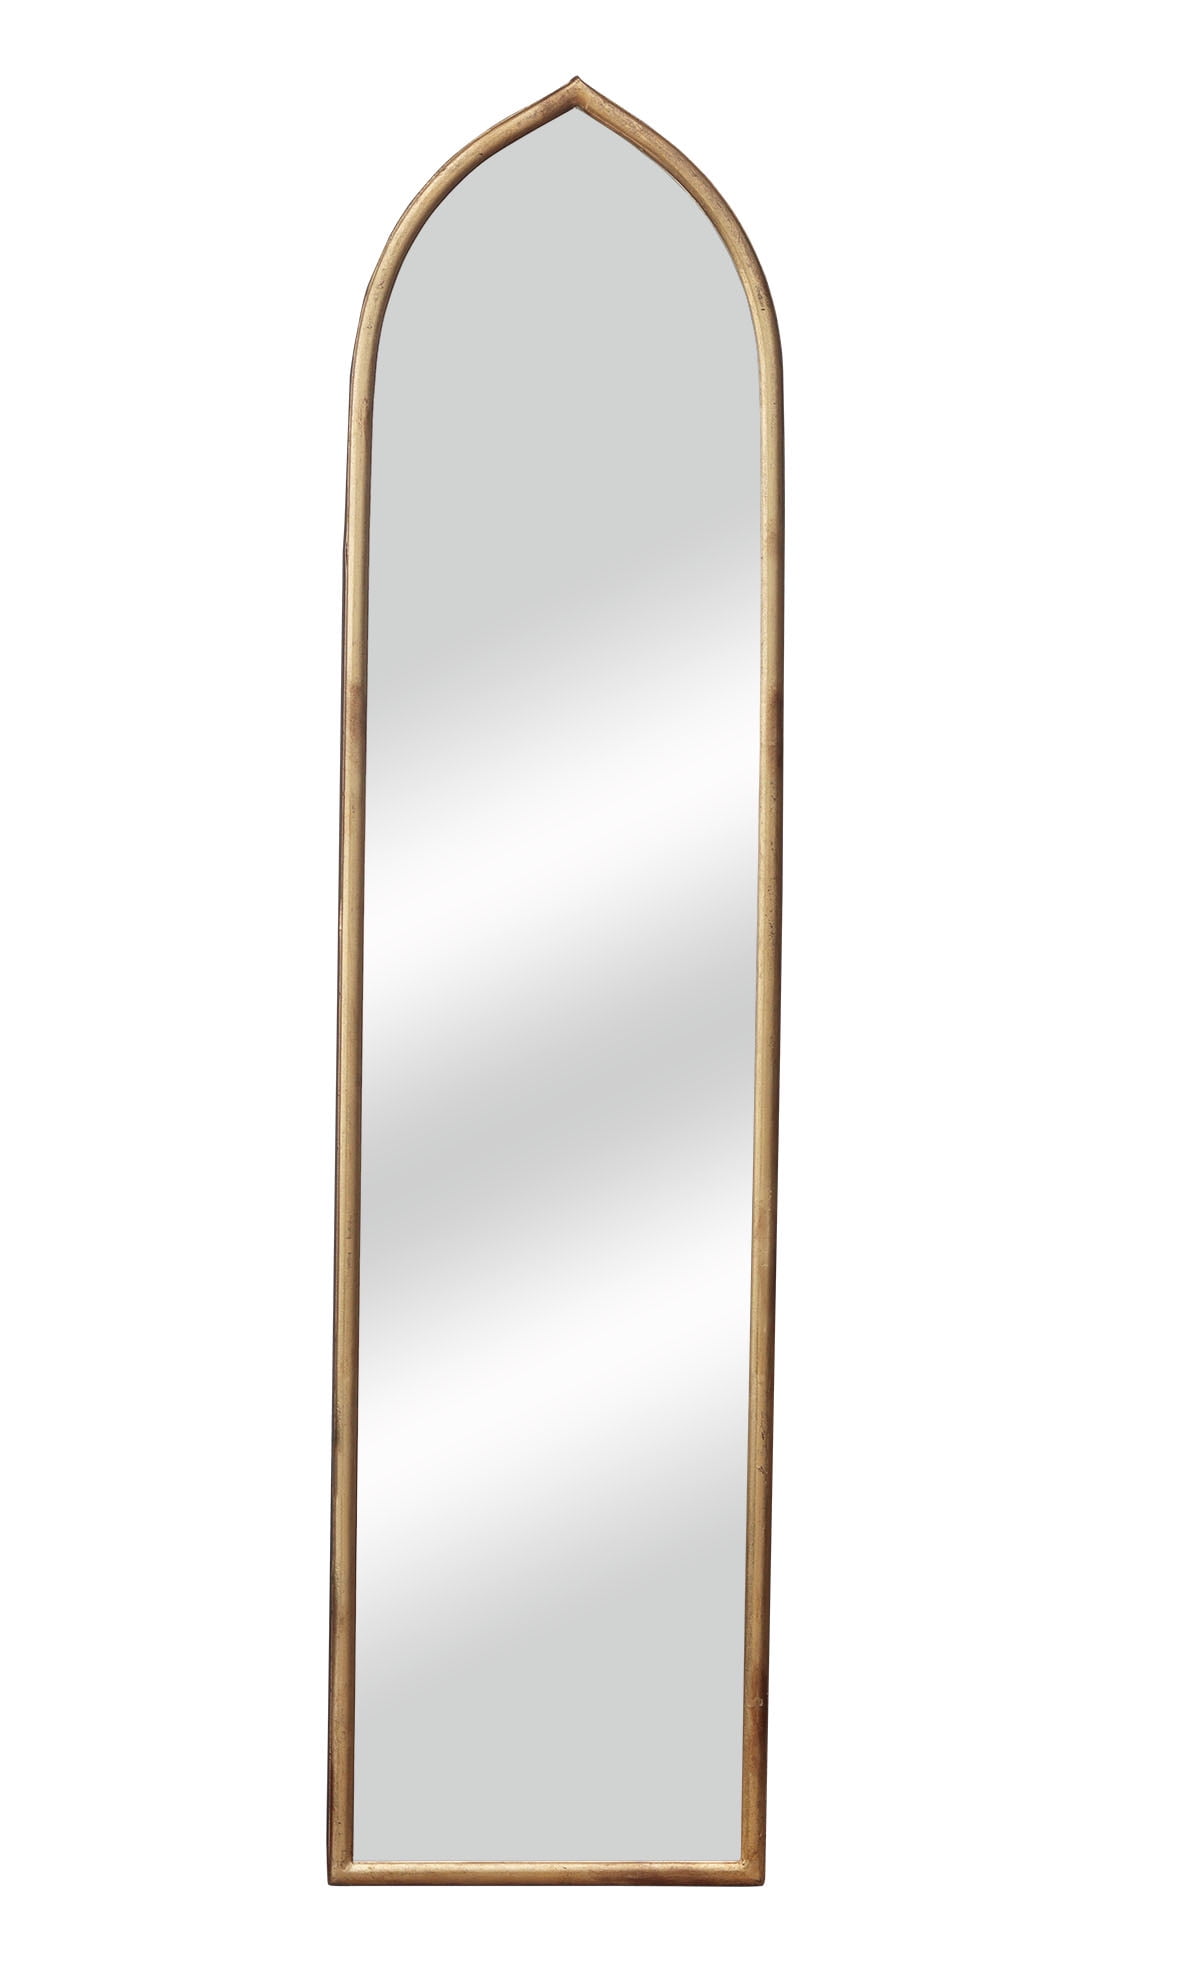 10Pcs Mirror Sheets Self Adhesive Non Glass Mirror 12 x 12 Inch Ultra-thin  Flexible Mirror Sheets DIY Tiles Mirror Stickers Wall Decor Mirror for Home